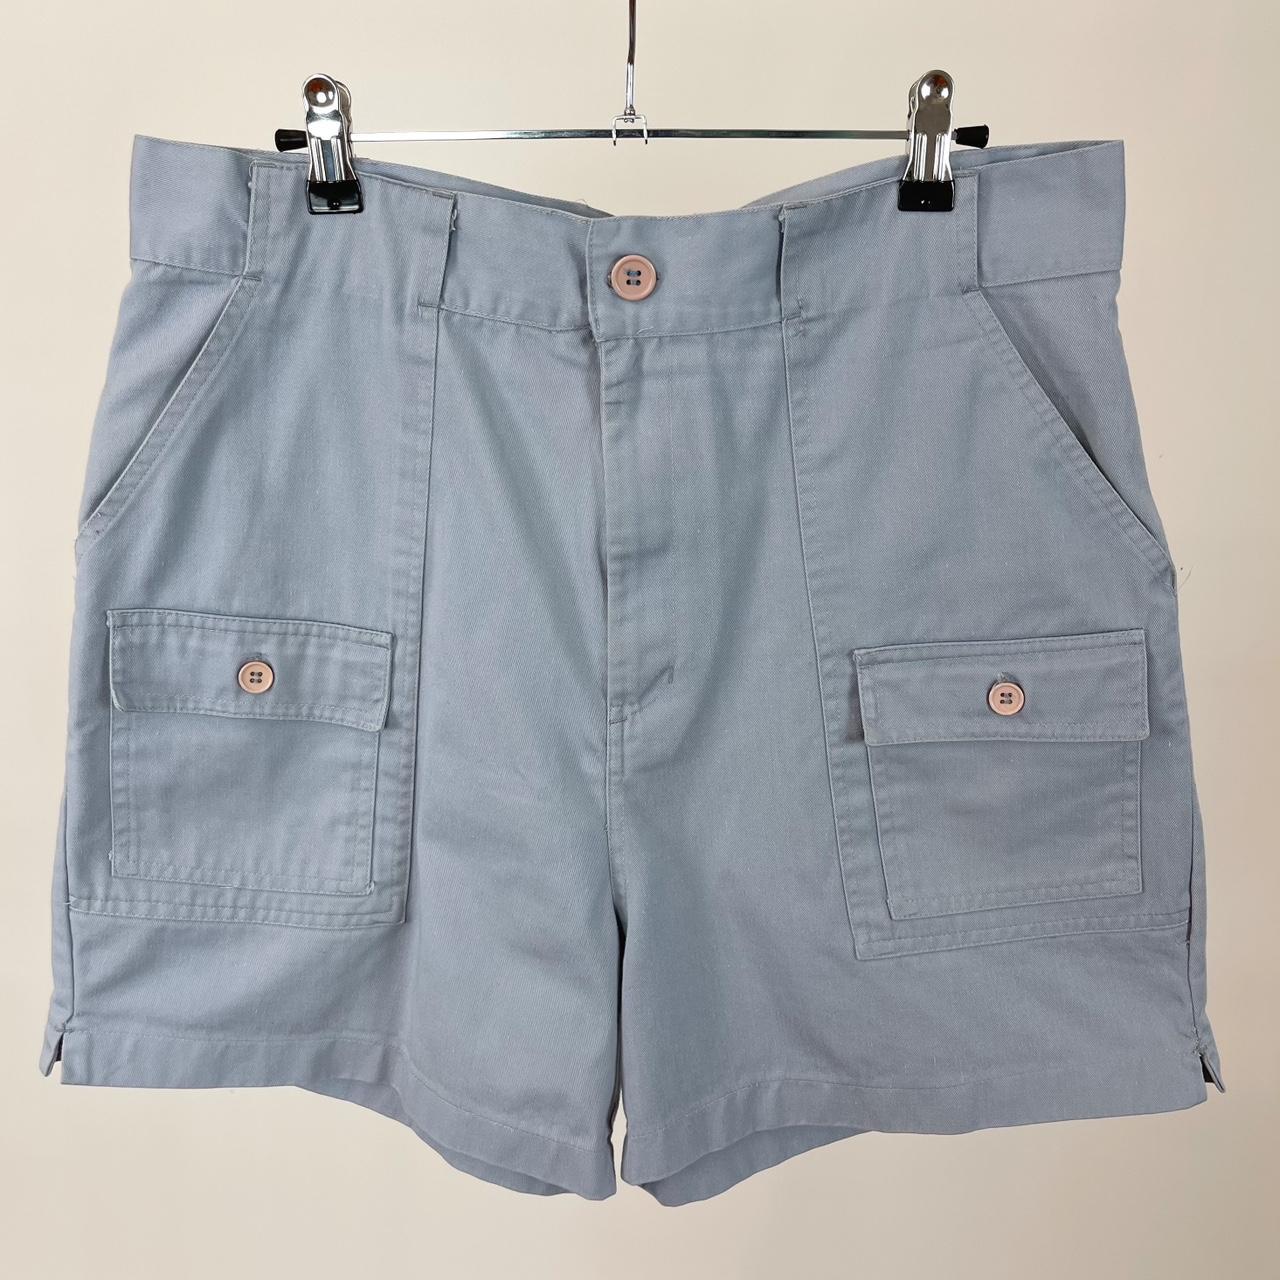 Haband Men's Grey and Blue Shorts | Depop